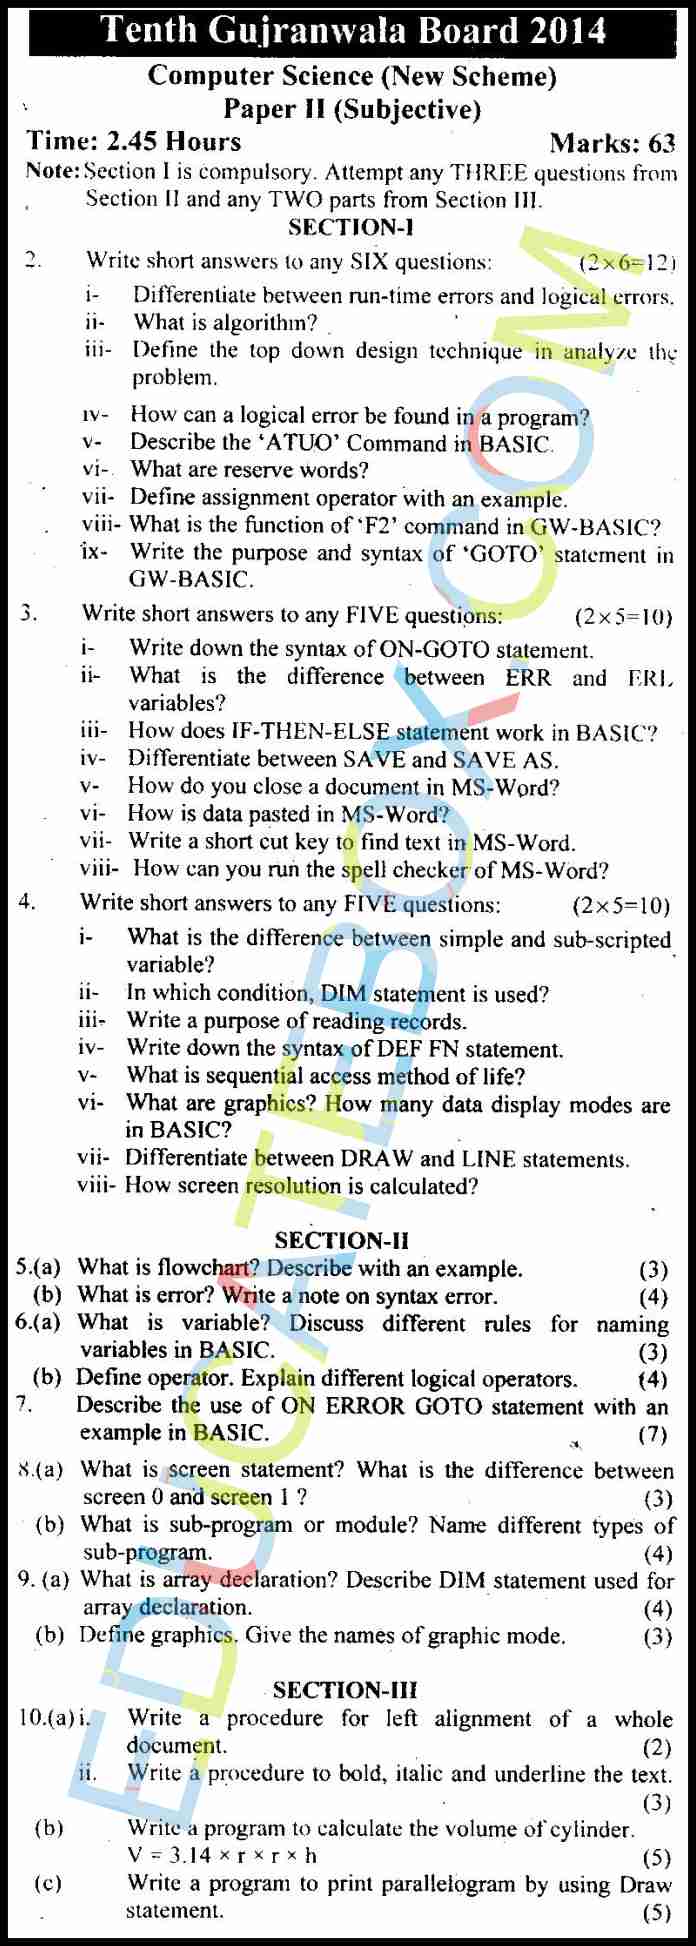 Past Paper 10th Computer Gujranwala 2014 (English Medium) - Subjective Type